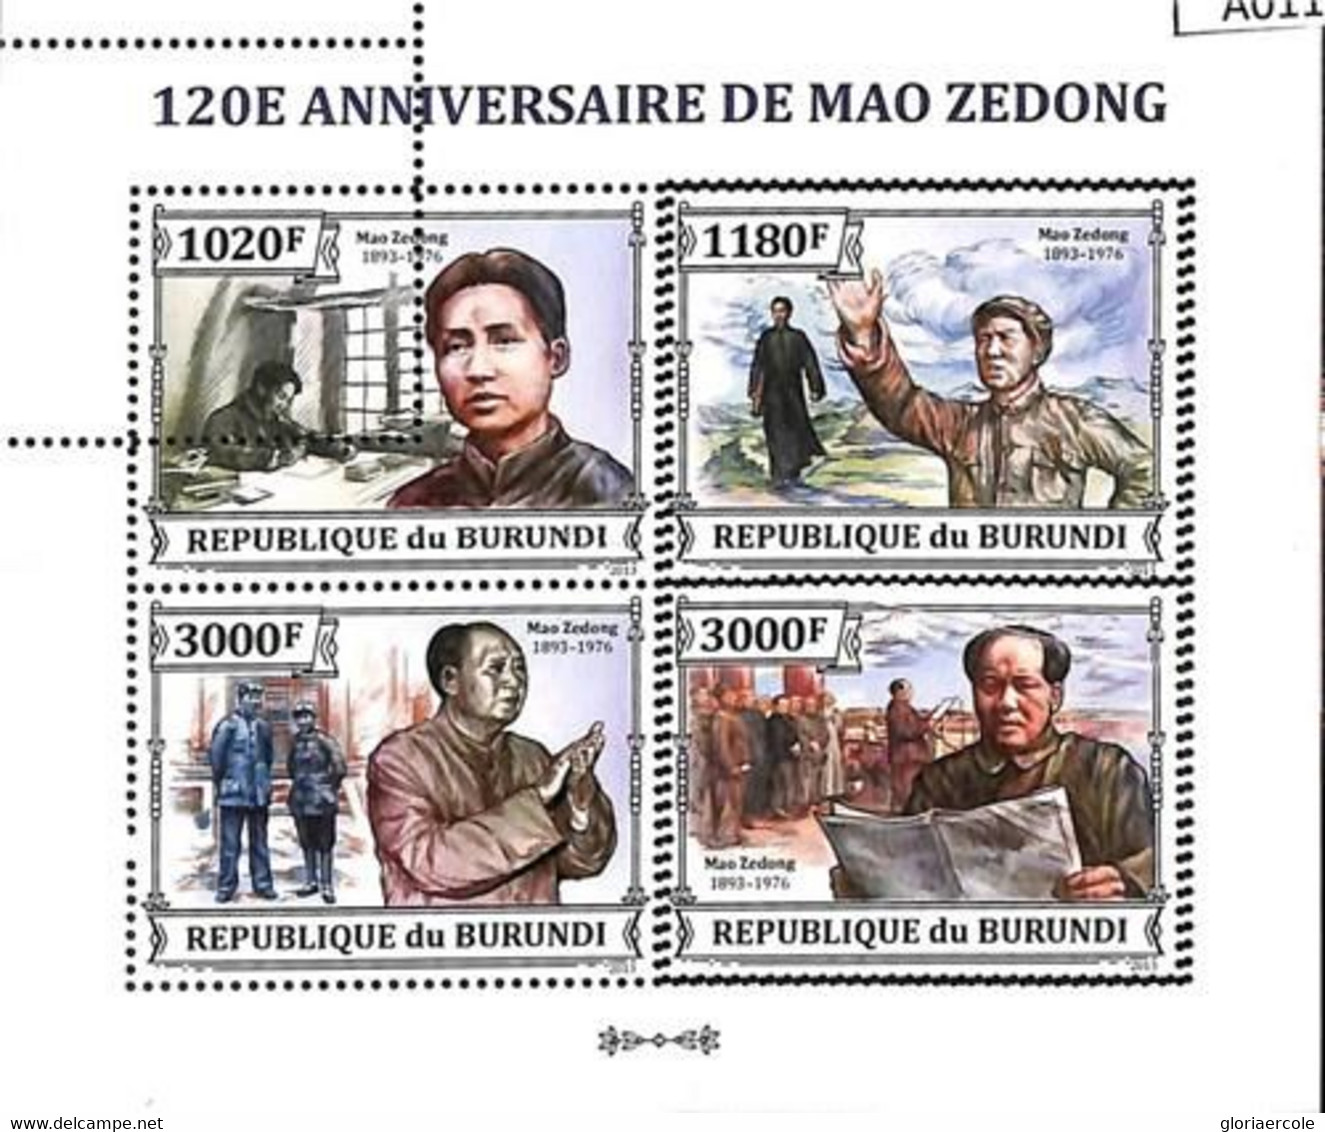 A0114 - BURUNDI - ERROR 2013  MISSPERF Stamp SHEET: Politics MAO ZEDONG - Mao Tse-Tung